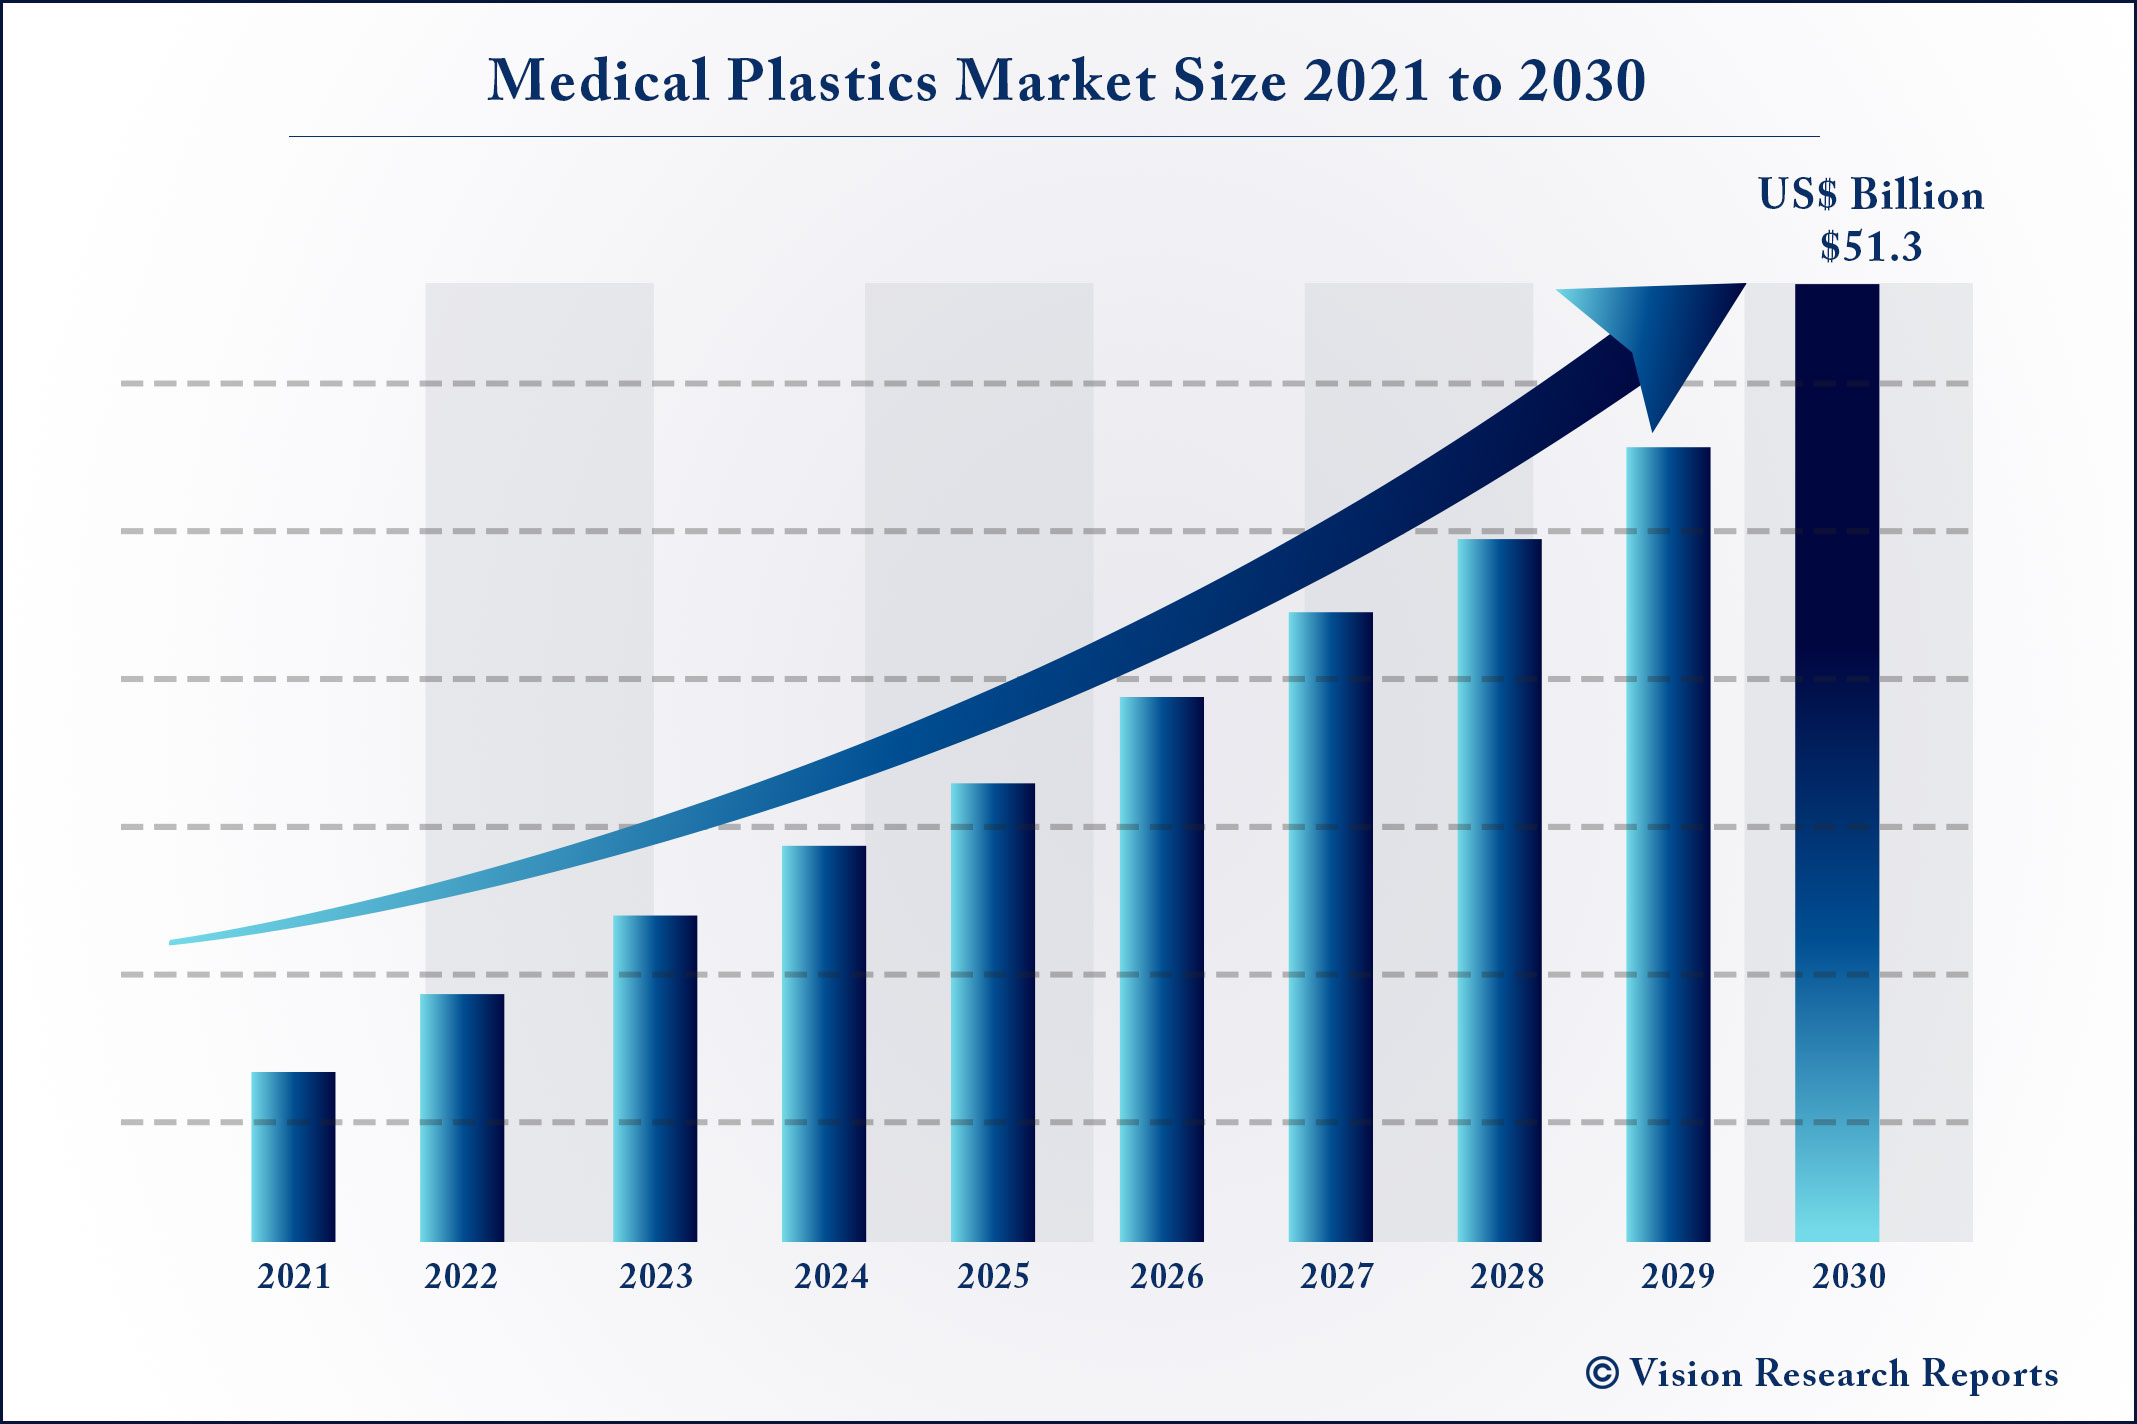 Medical Plastics Market Size 2021 to 2030